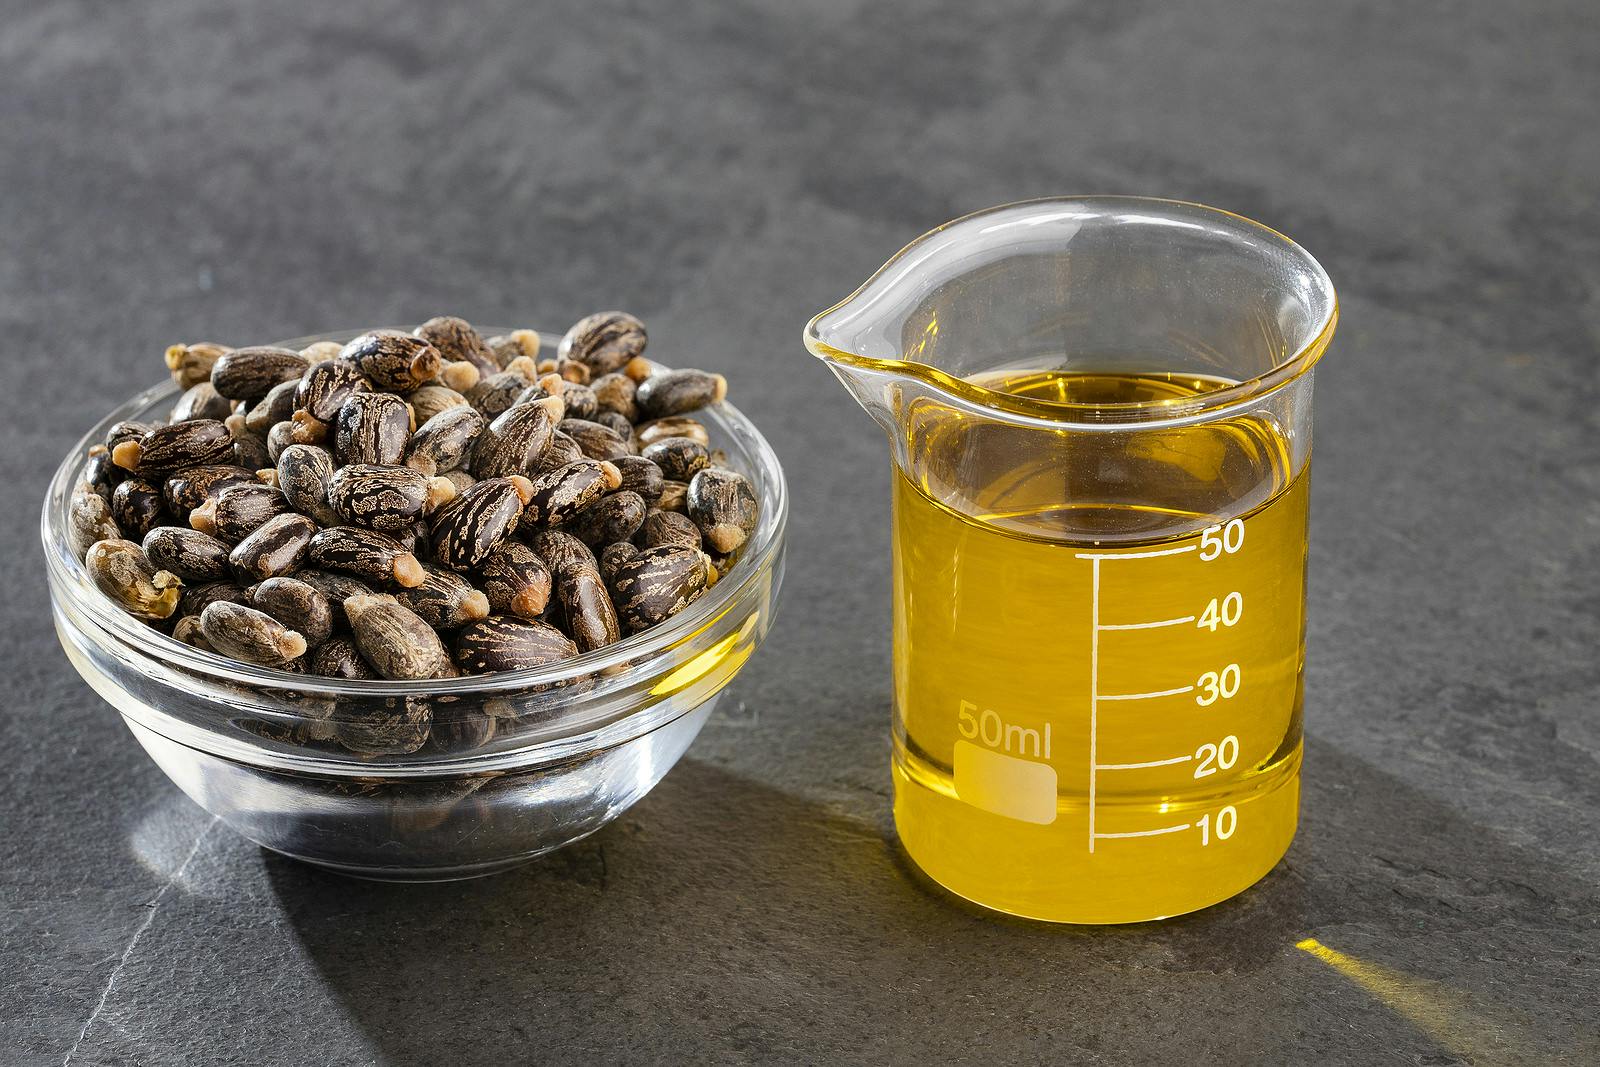 castor beans in a bowl and castor oil in a glass beaker